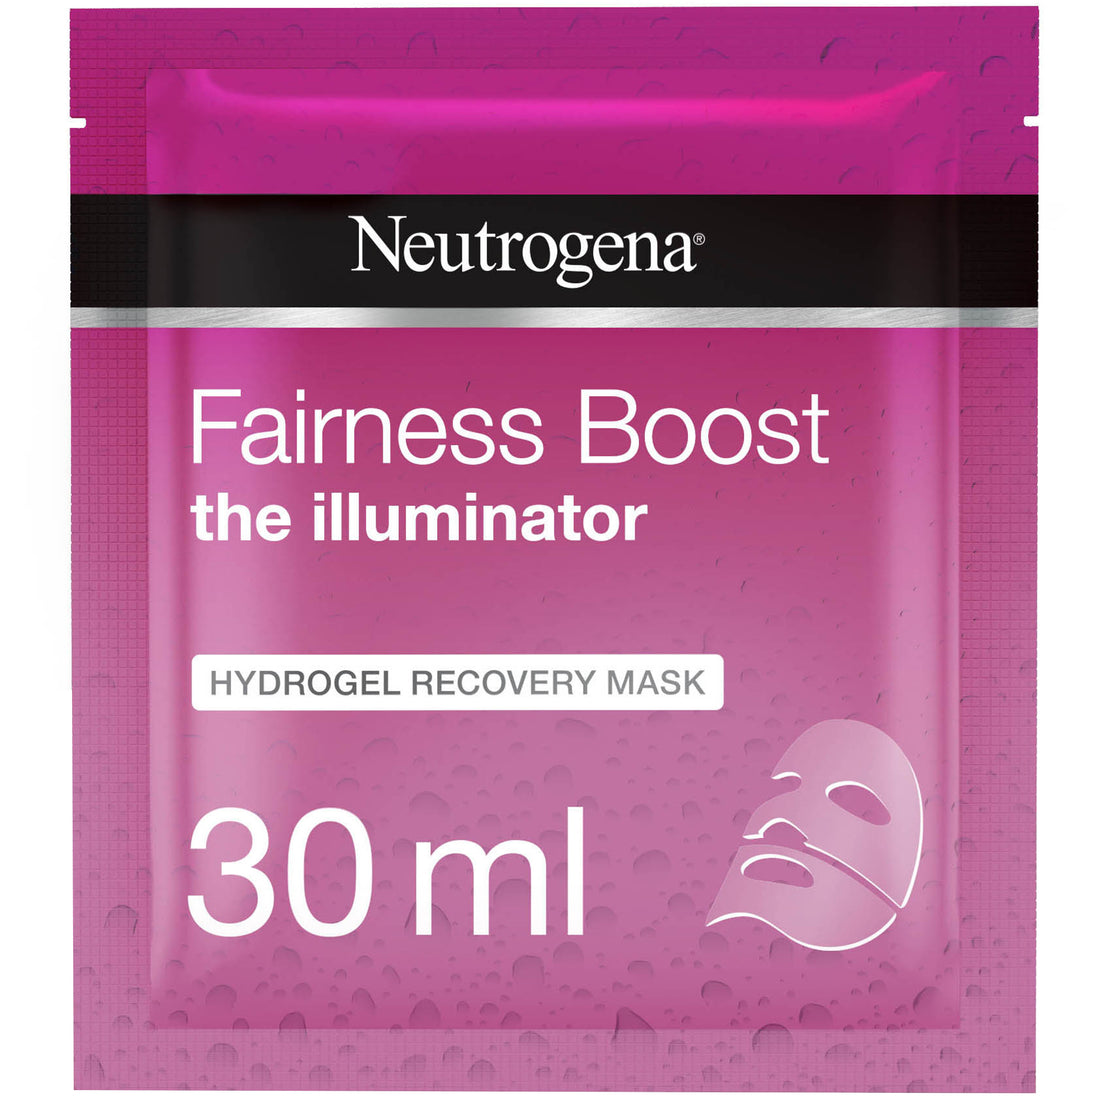 Neutrogena, The Illuminator, Fairness Boost Hydrogel Recovery Mask, 30ml